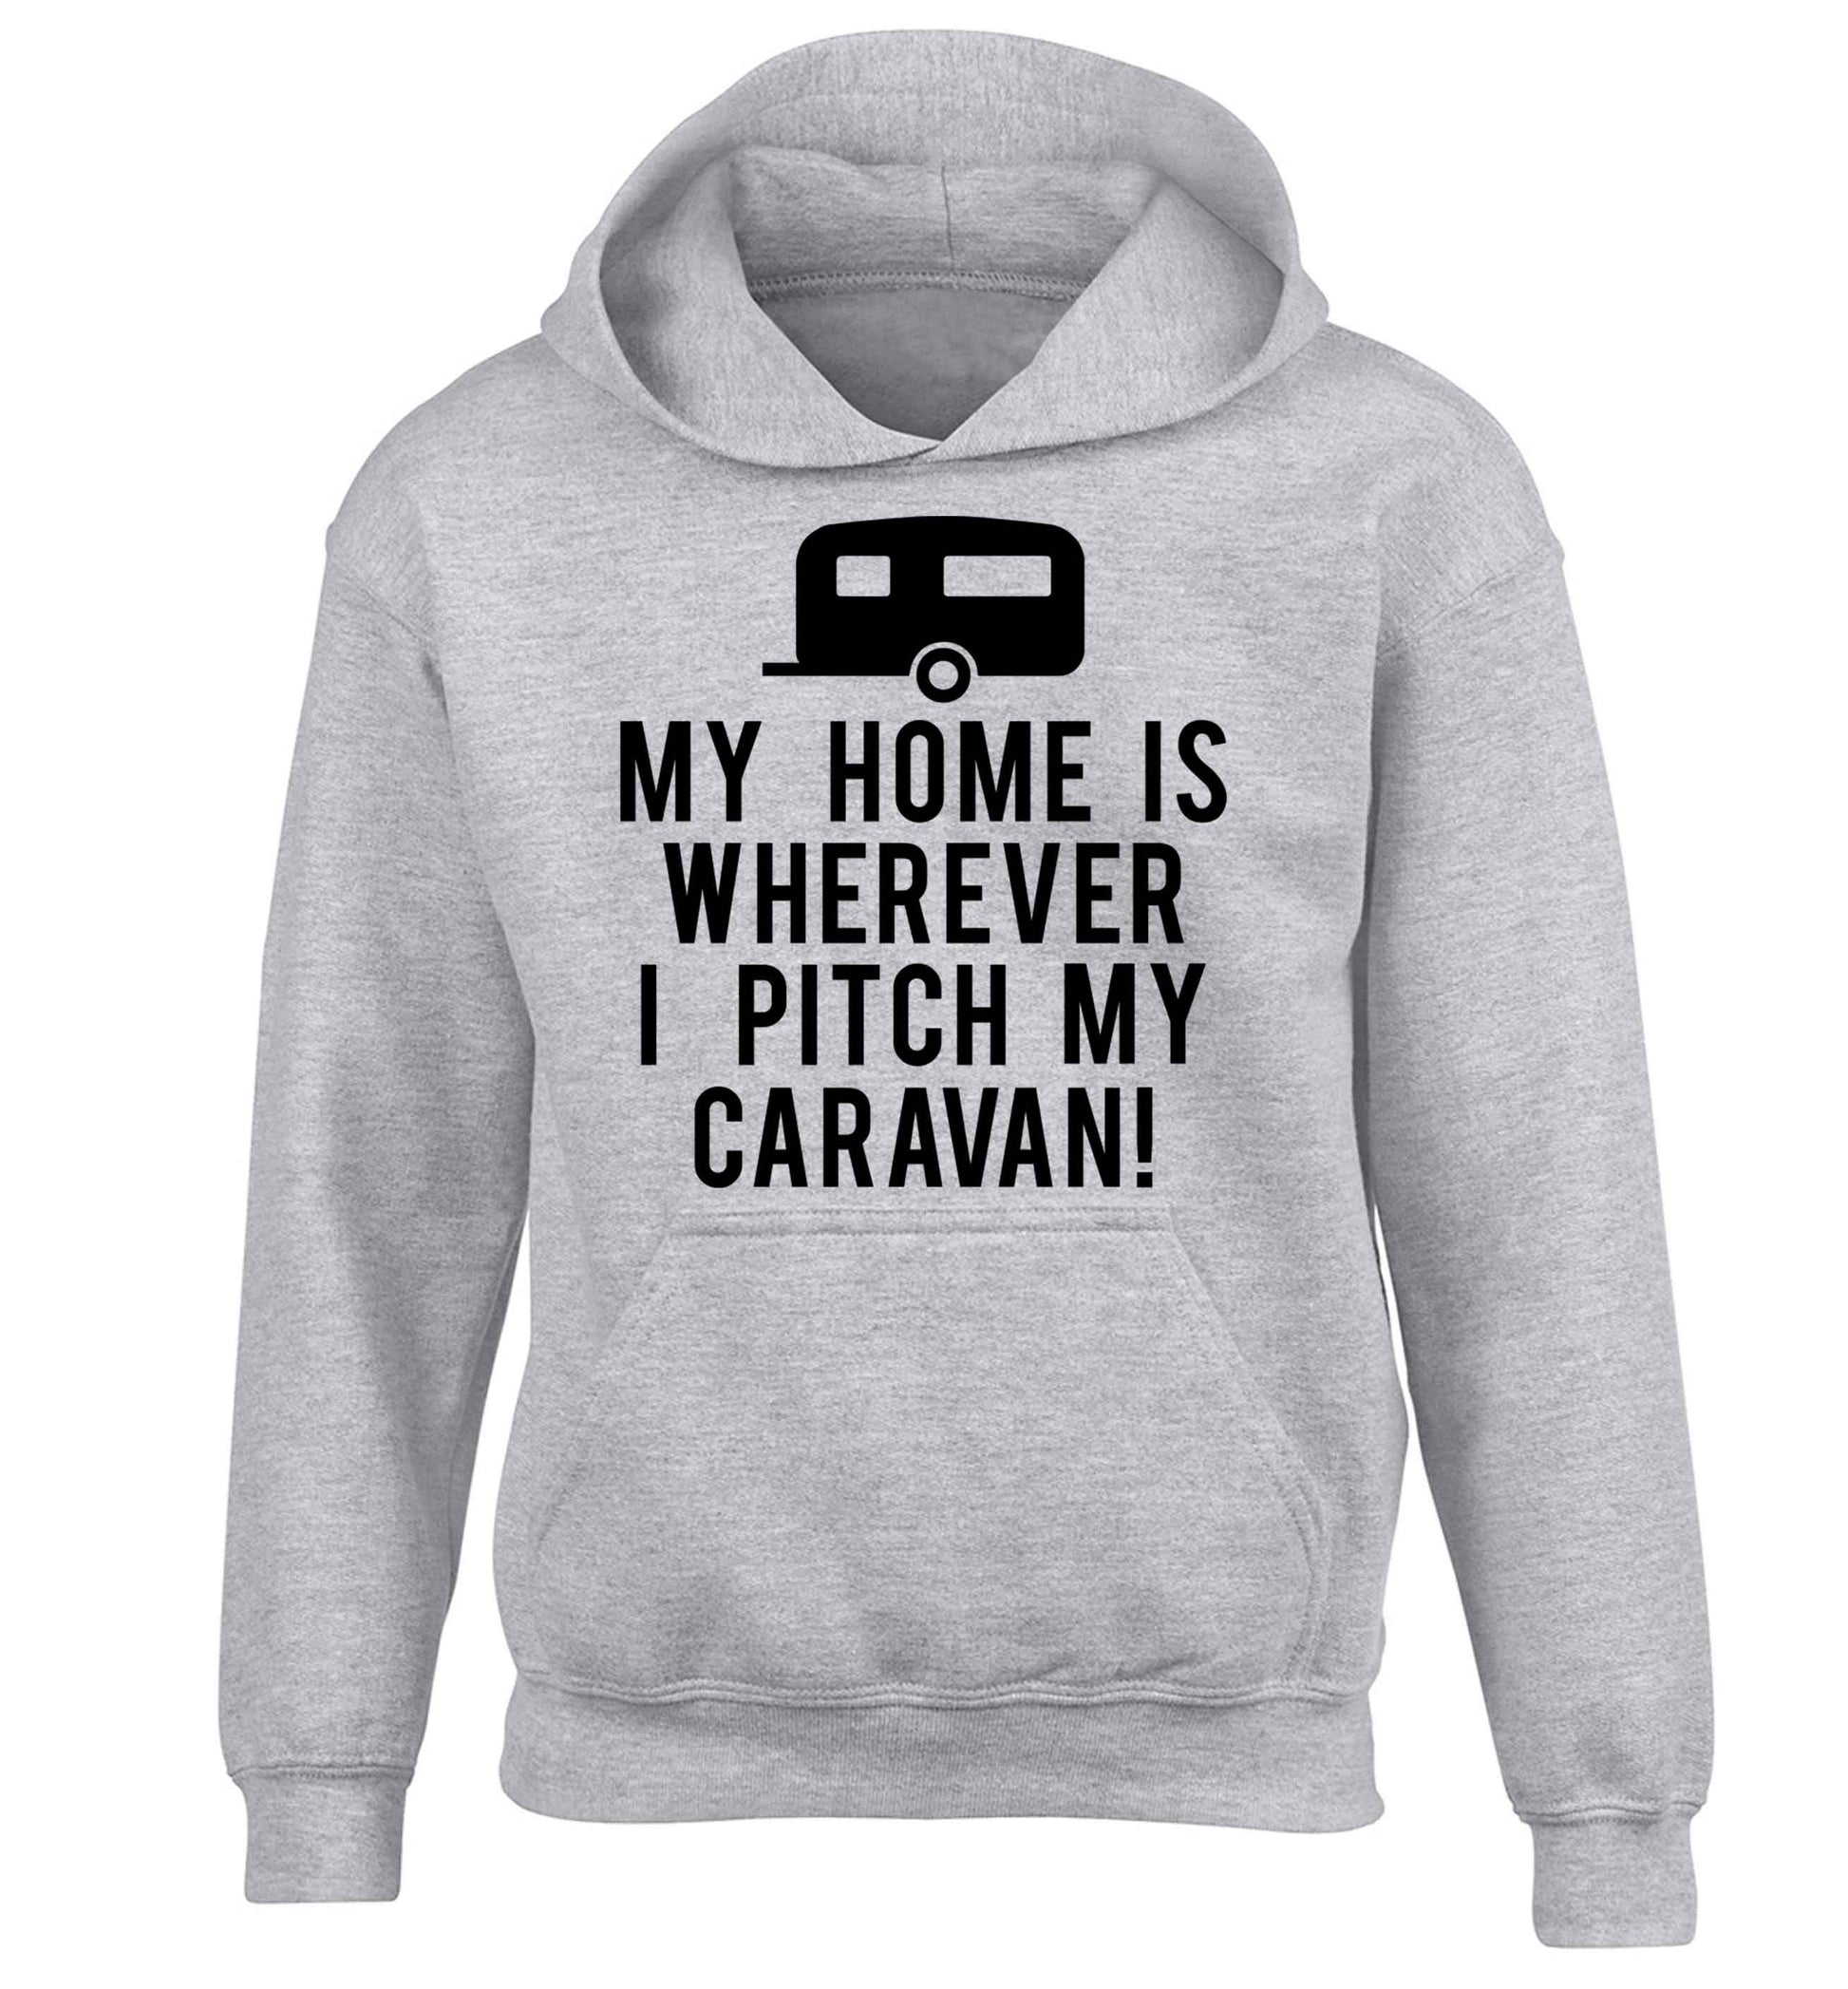 My home is wherever I pitch my caravan children's grey hoodie 12-13 Years